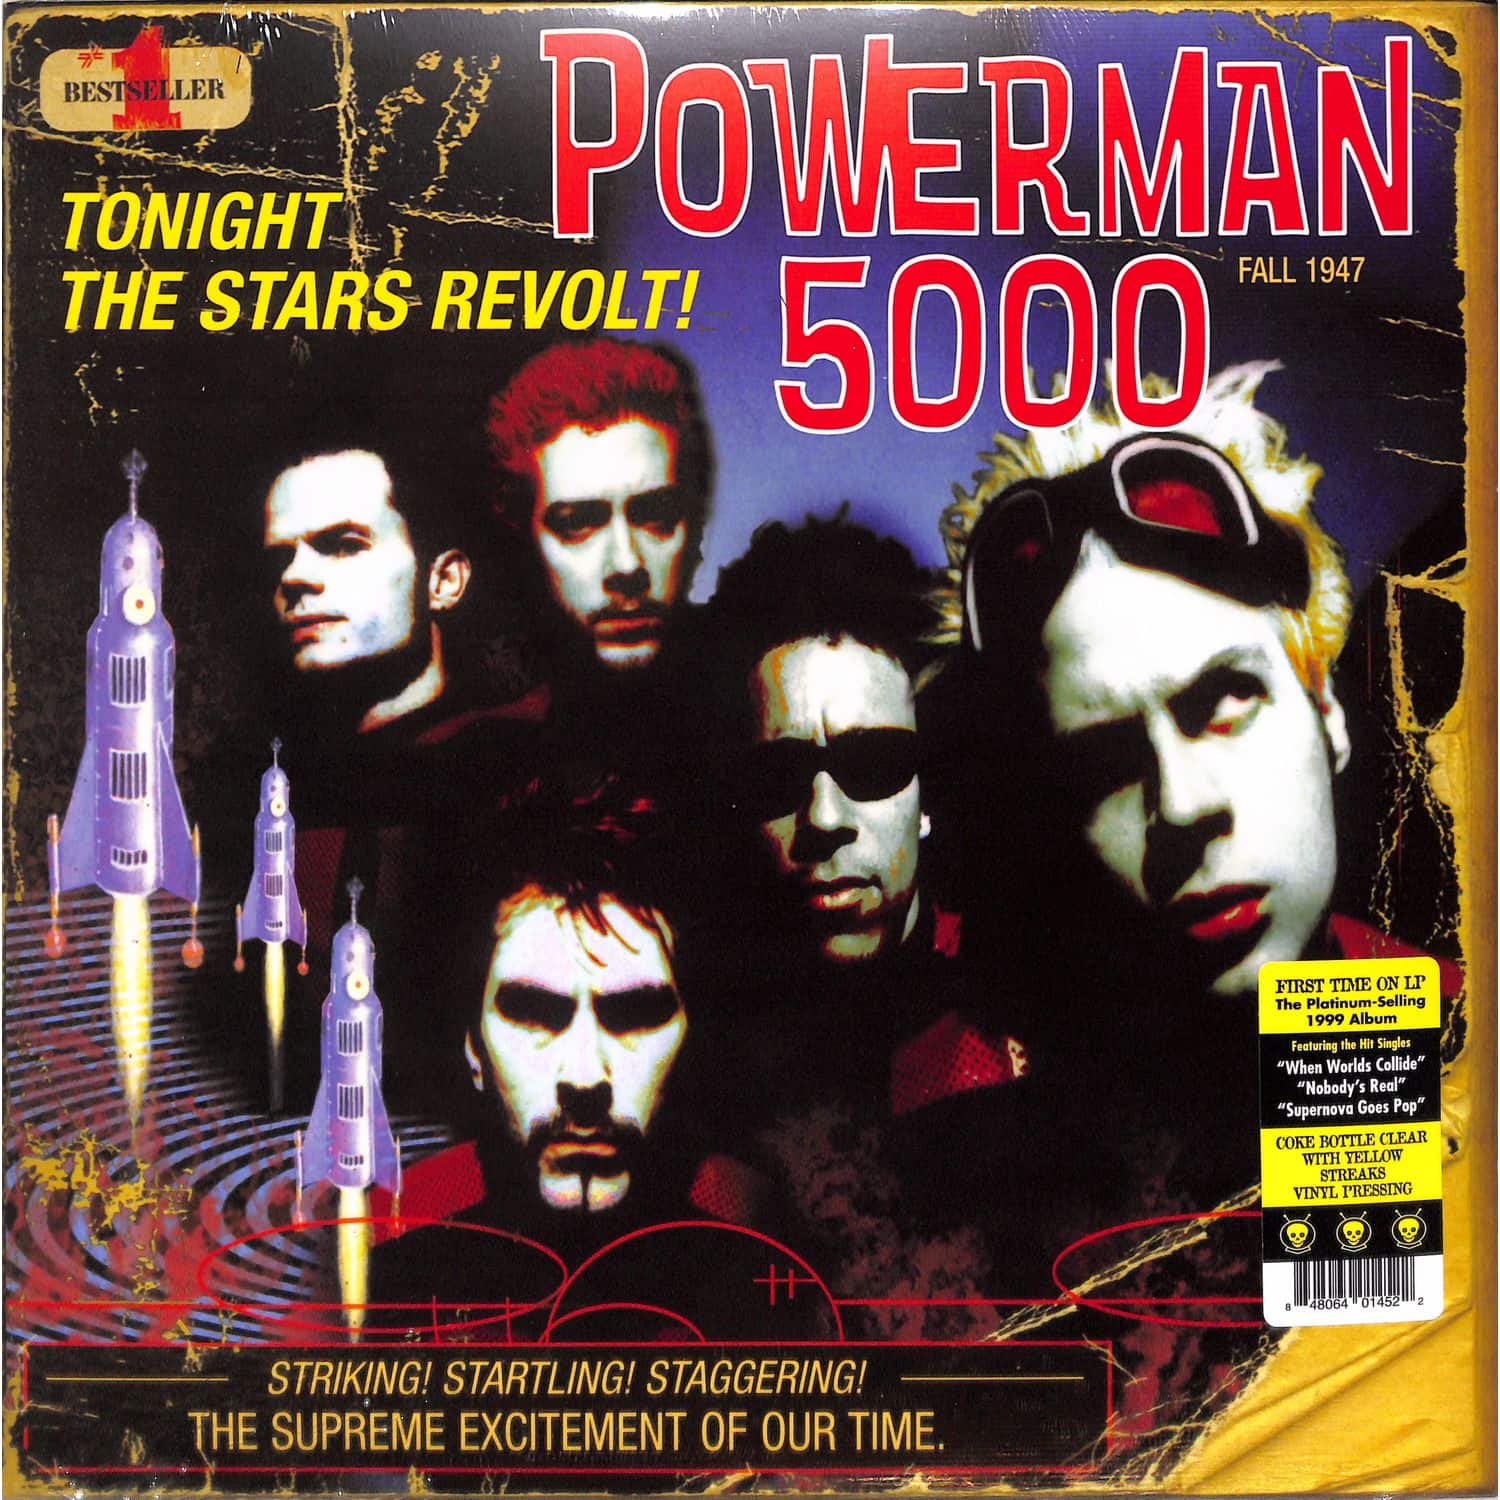 Powerman 5000 - TONIGHT THE STARS REVOLT 